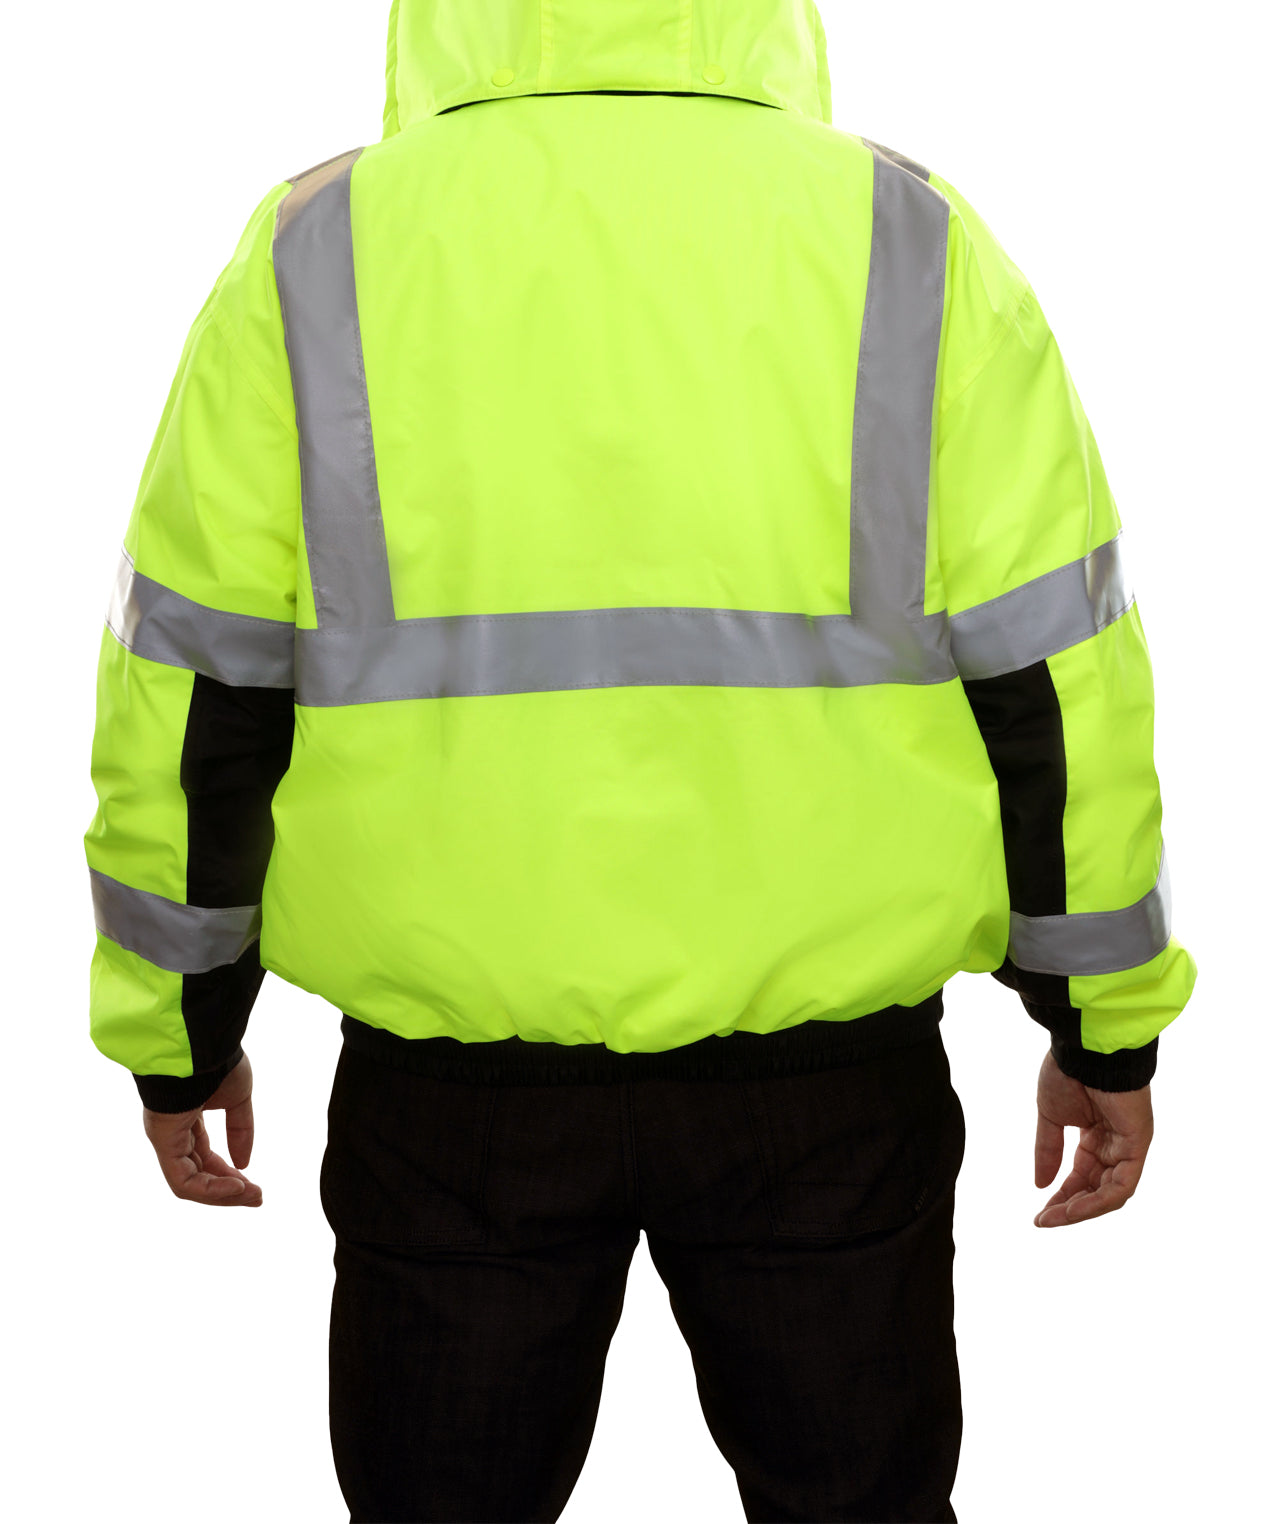 411STLB Safety Jacket: Hi-Vis Bomber: Breathable Waterproof: Hood: Lime 2-Tone